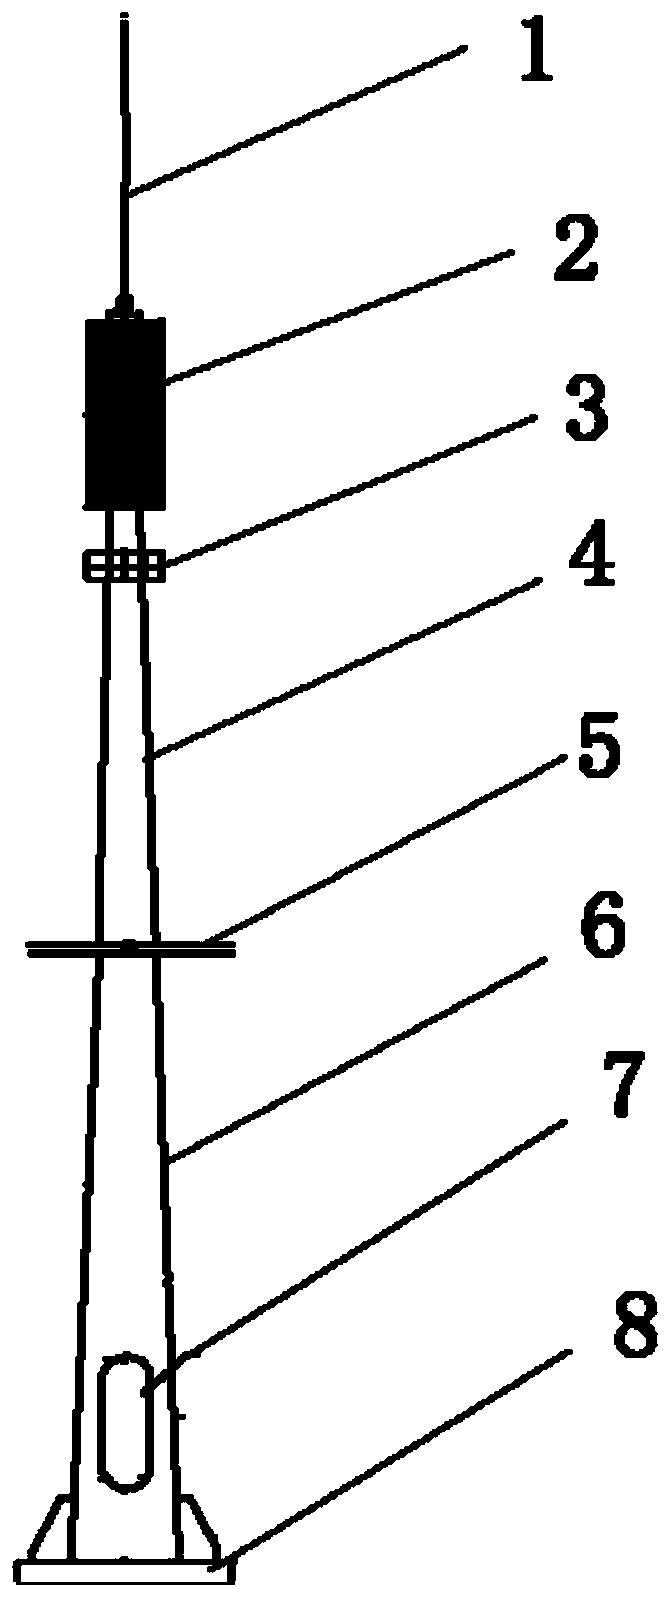 Twenty-meter landscaping light pole for wireless communication